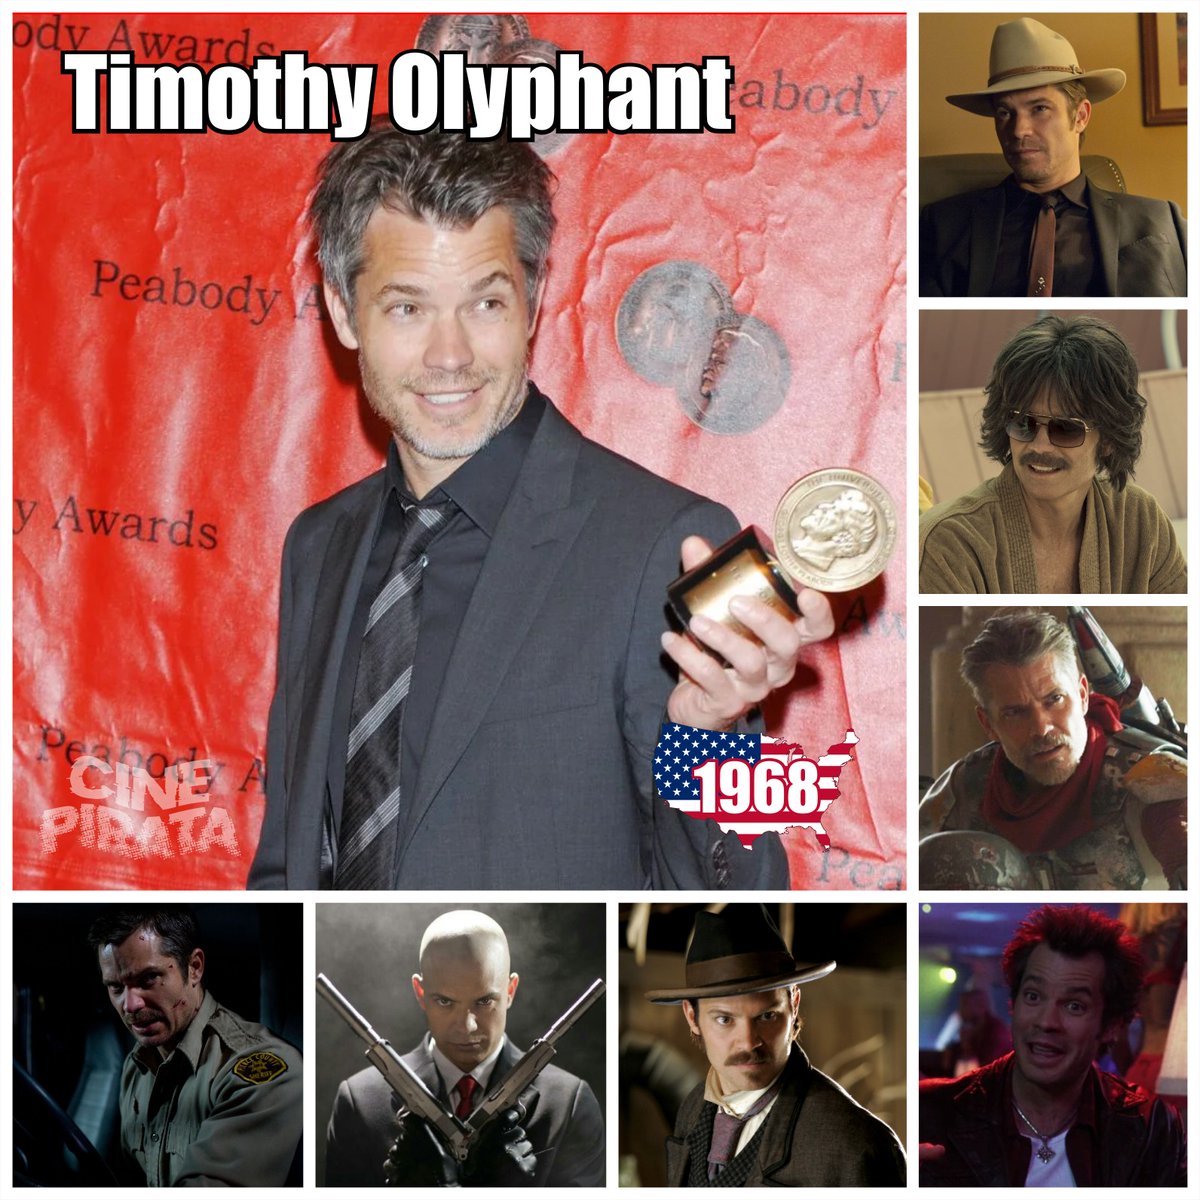 ¡ FELIZ CUMPLEAÑOS !
Timothy Olyphant 🥳🎂

+Cine -Pirata
#Cine #UnDiaComoHoy #CinePirata #TimothyOlyphant #Cine2024